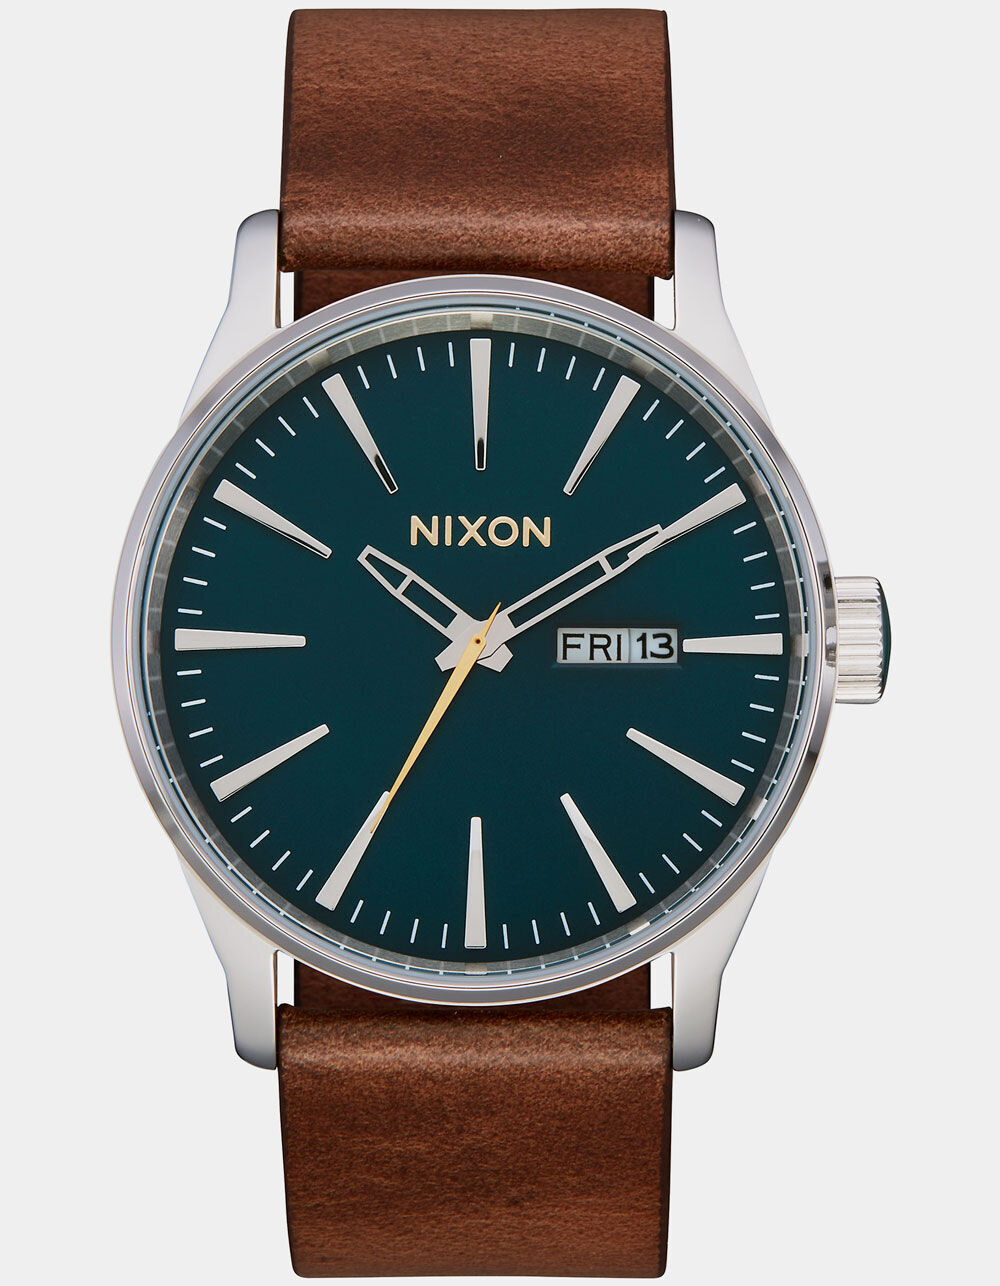 nixon sentry leather dark green and brown watch.jpg